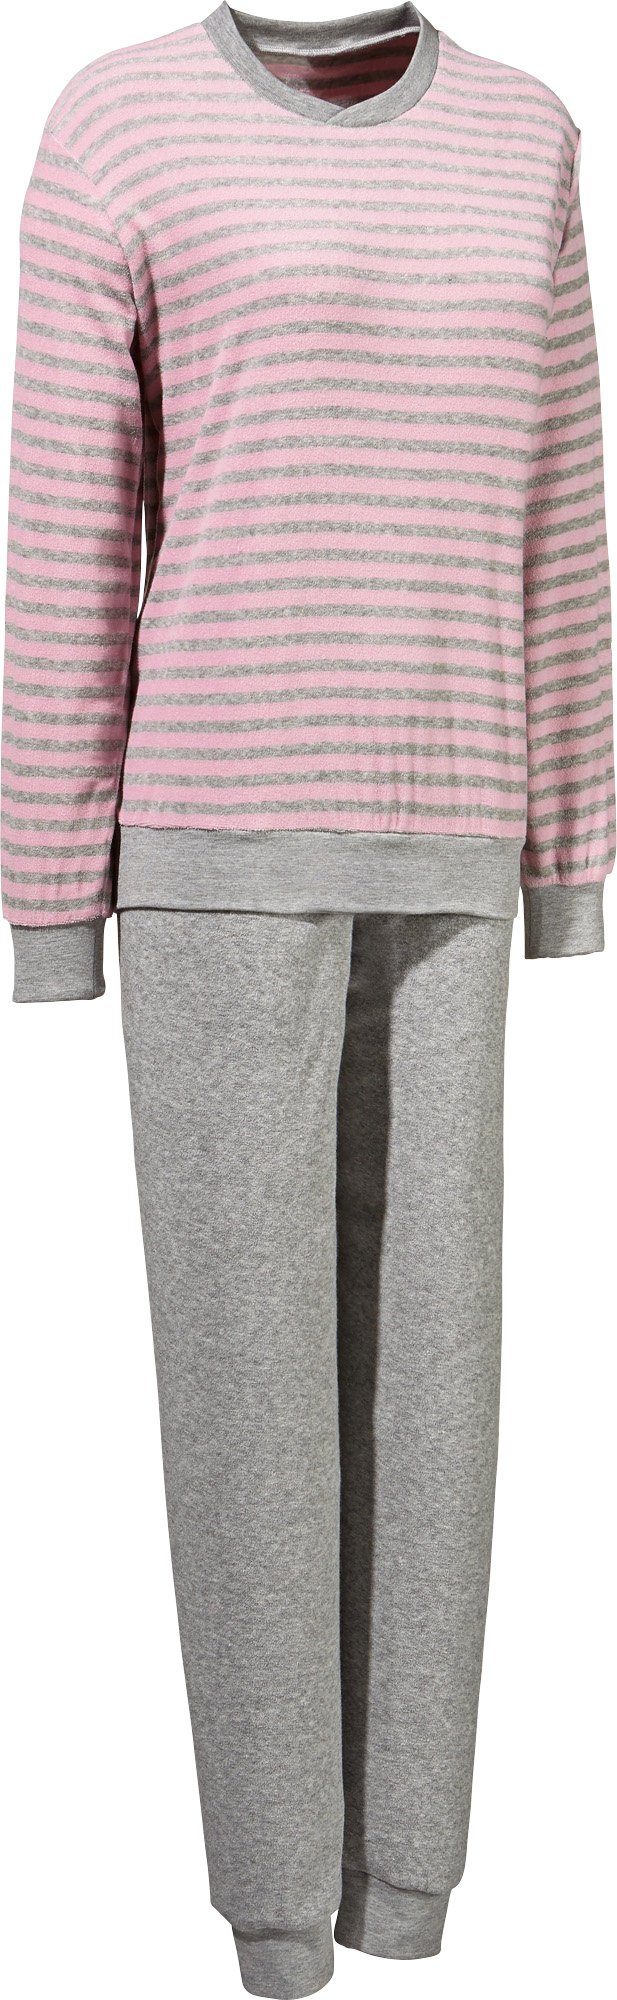 Erwin Müller Pyjama Damen-Schlafanzug Streifen Frottee